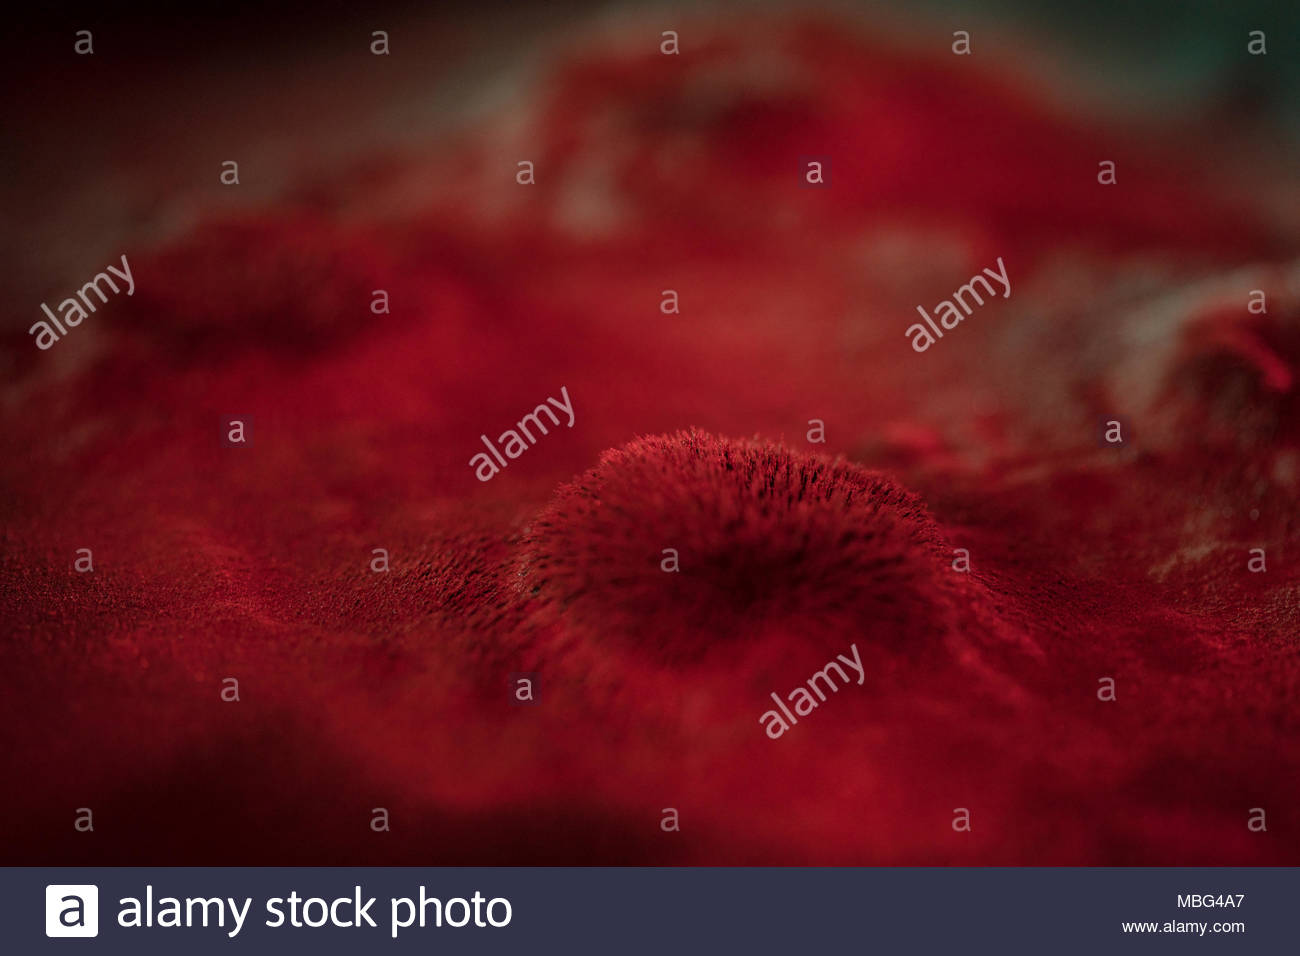 Microscopic red virus spore growth Stock Photo